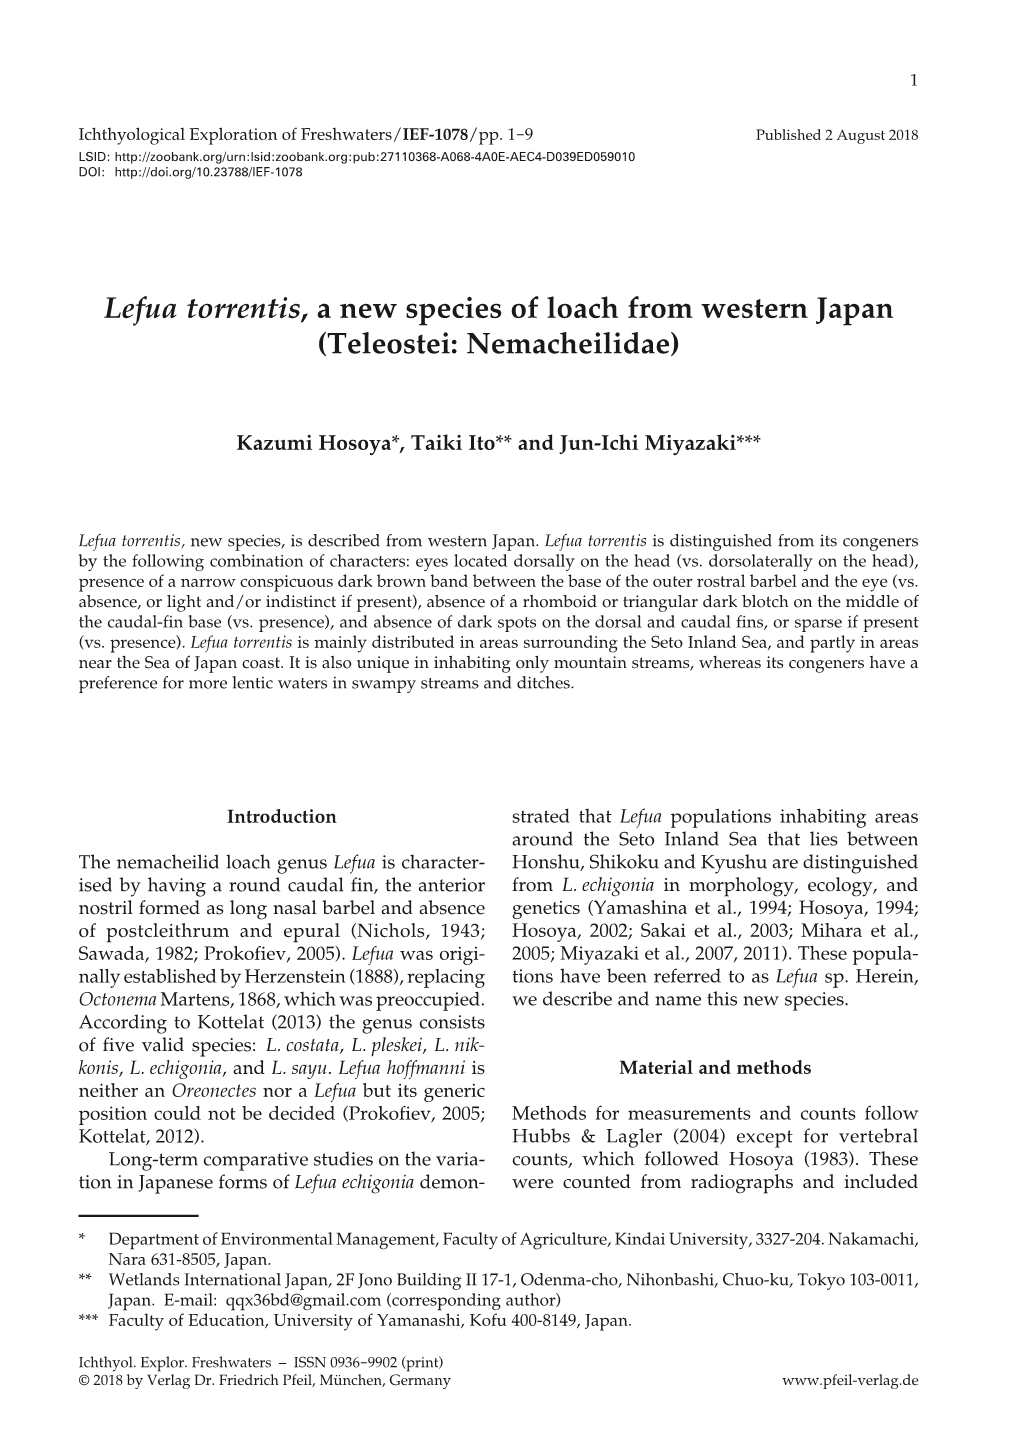 Lefua Torrentis, a New Species of Loach from Western Japan (Teleostei: Nemacheilidae)